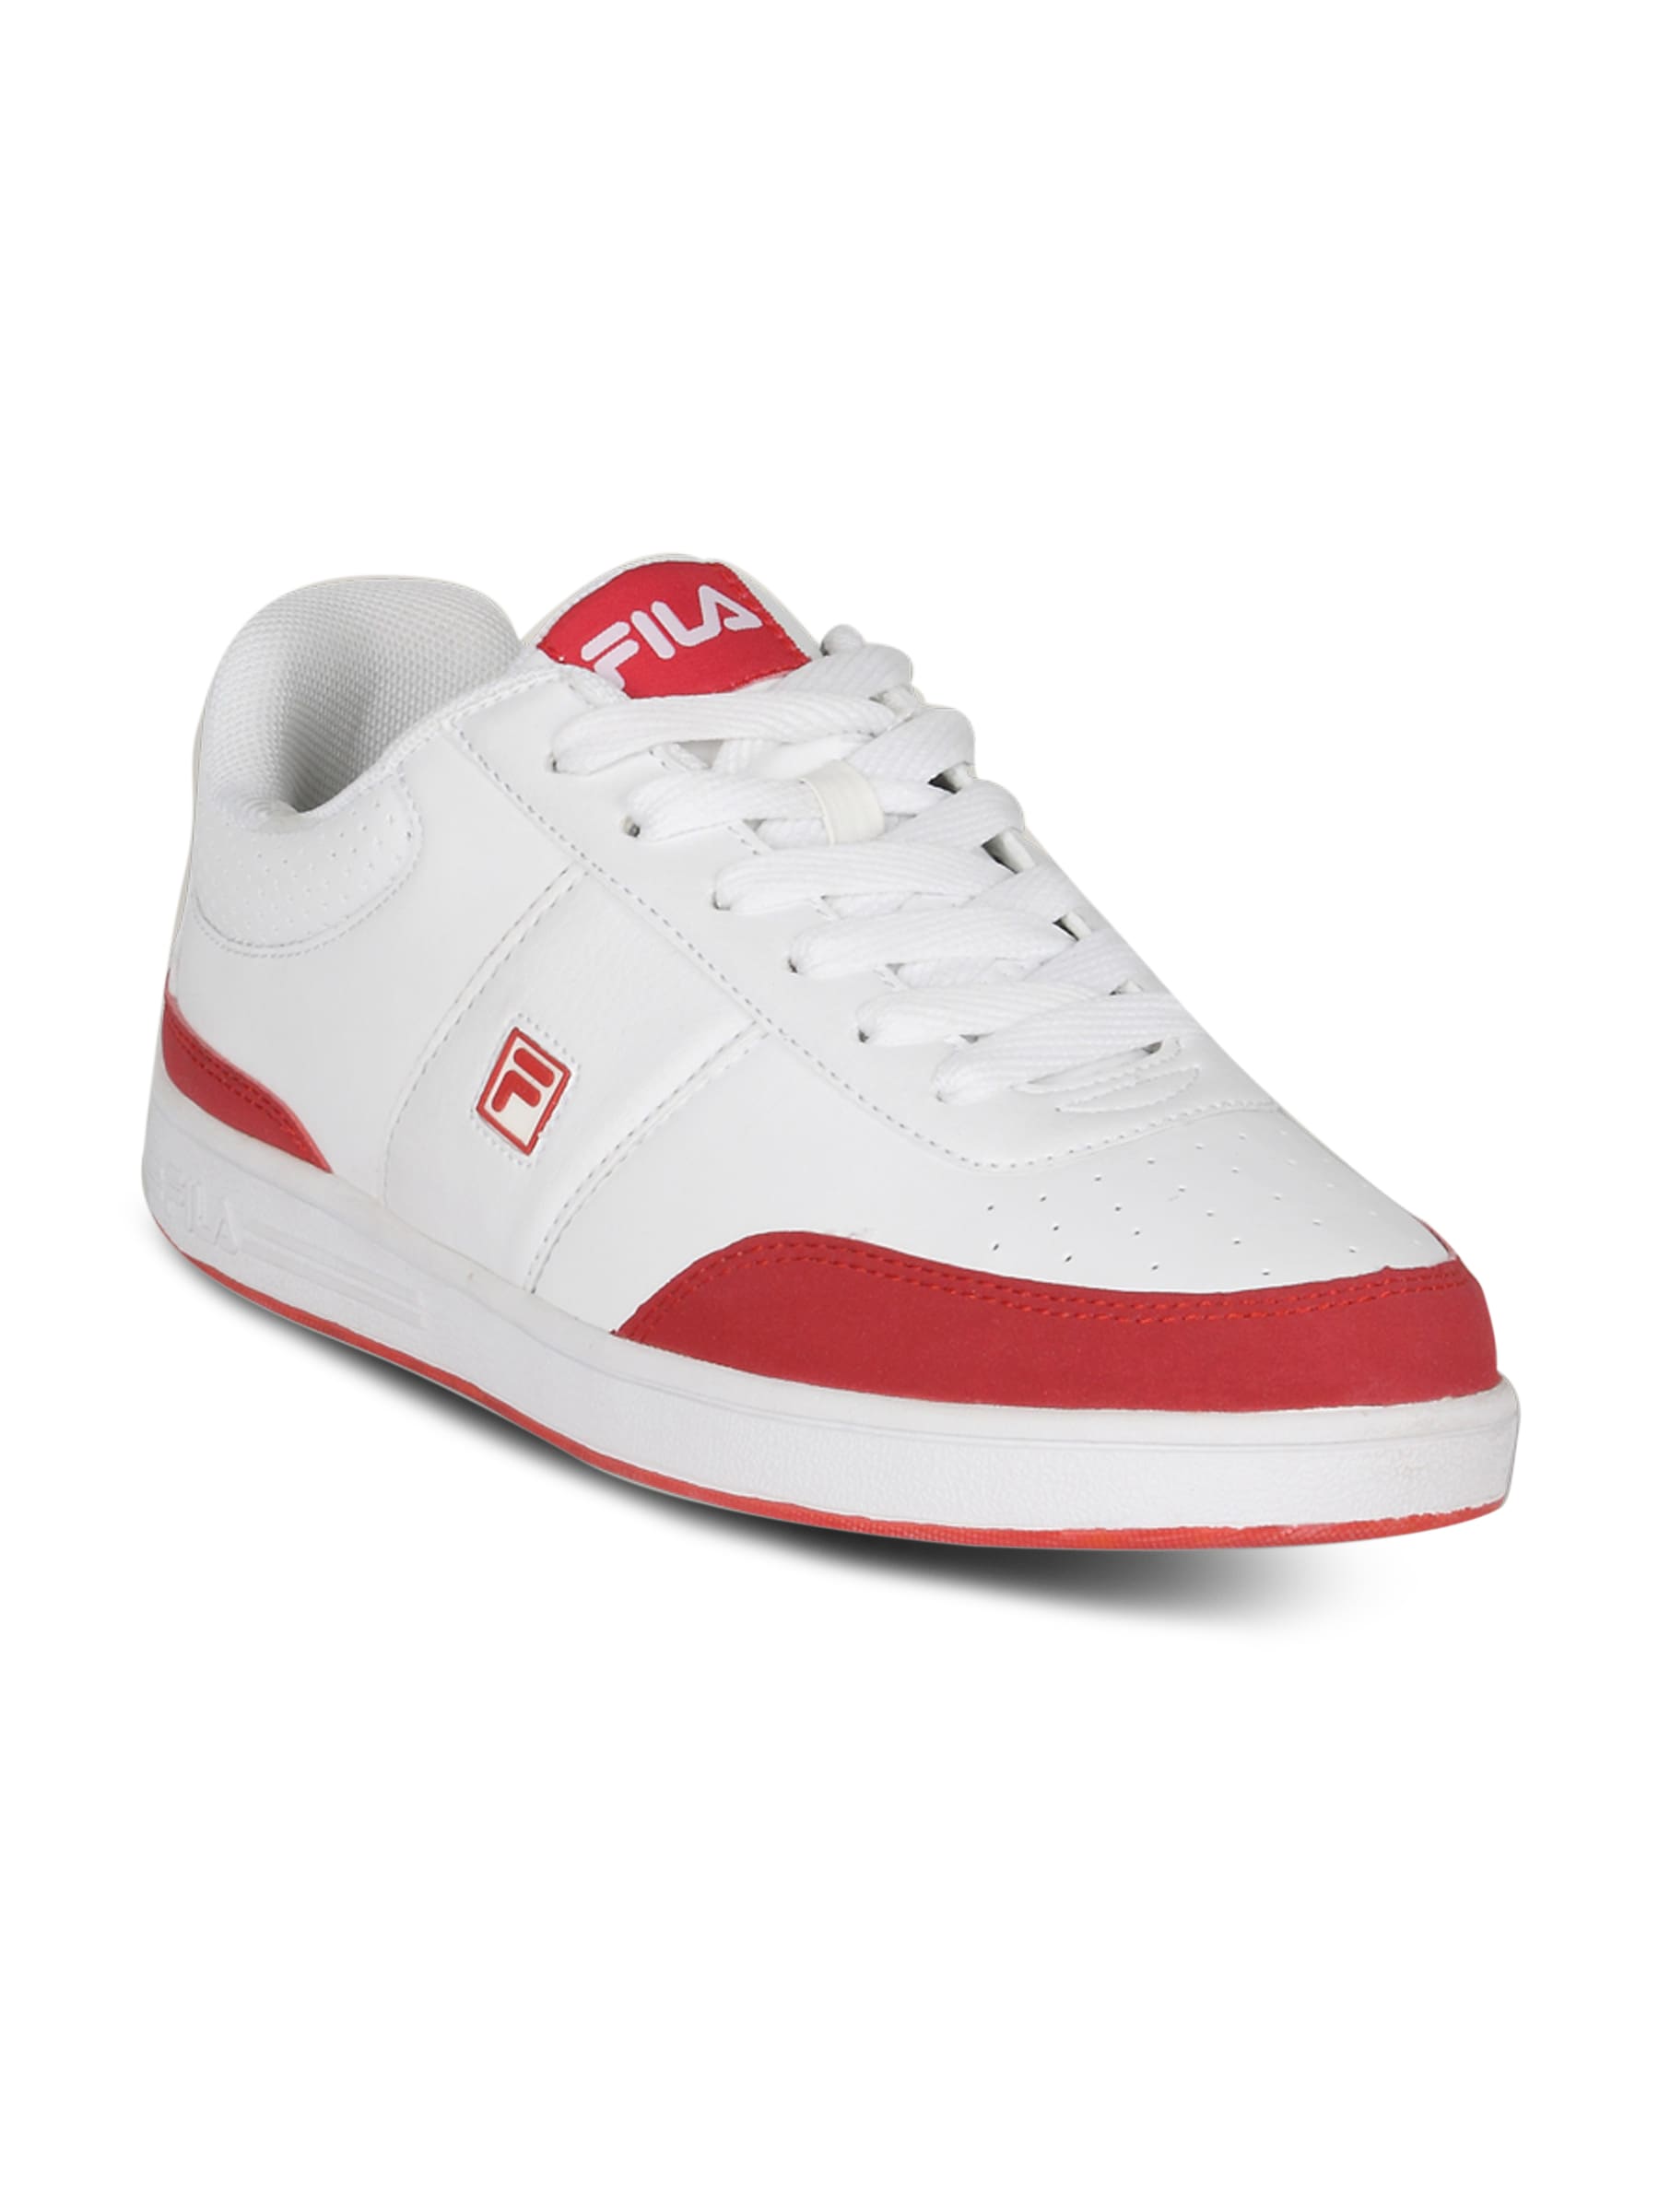 Fila Men's Rowley White Red Shoe